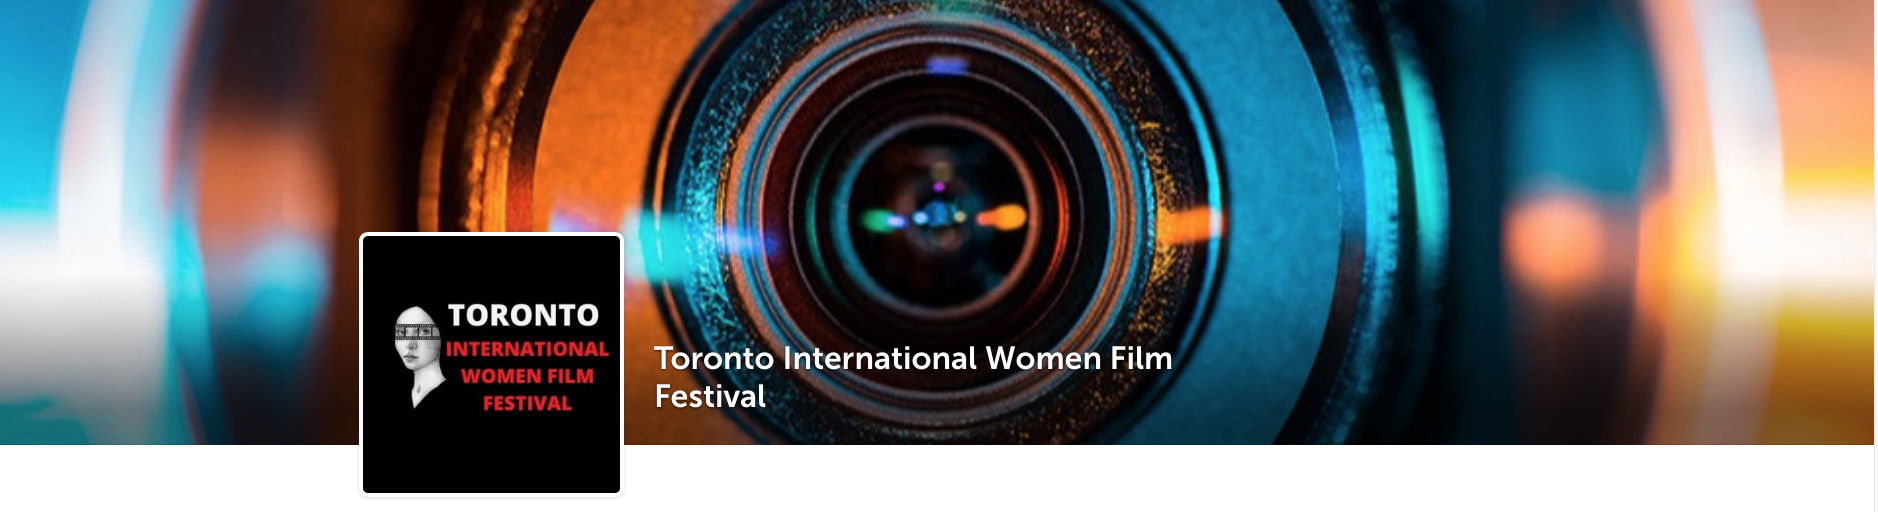 Toronto-Internation-Women-Film-Festival